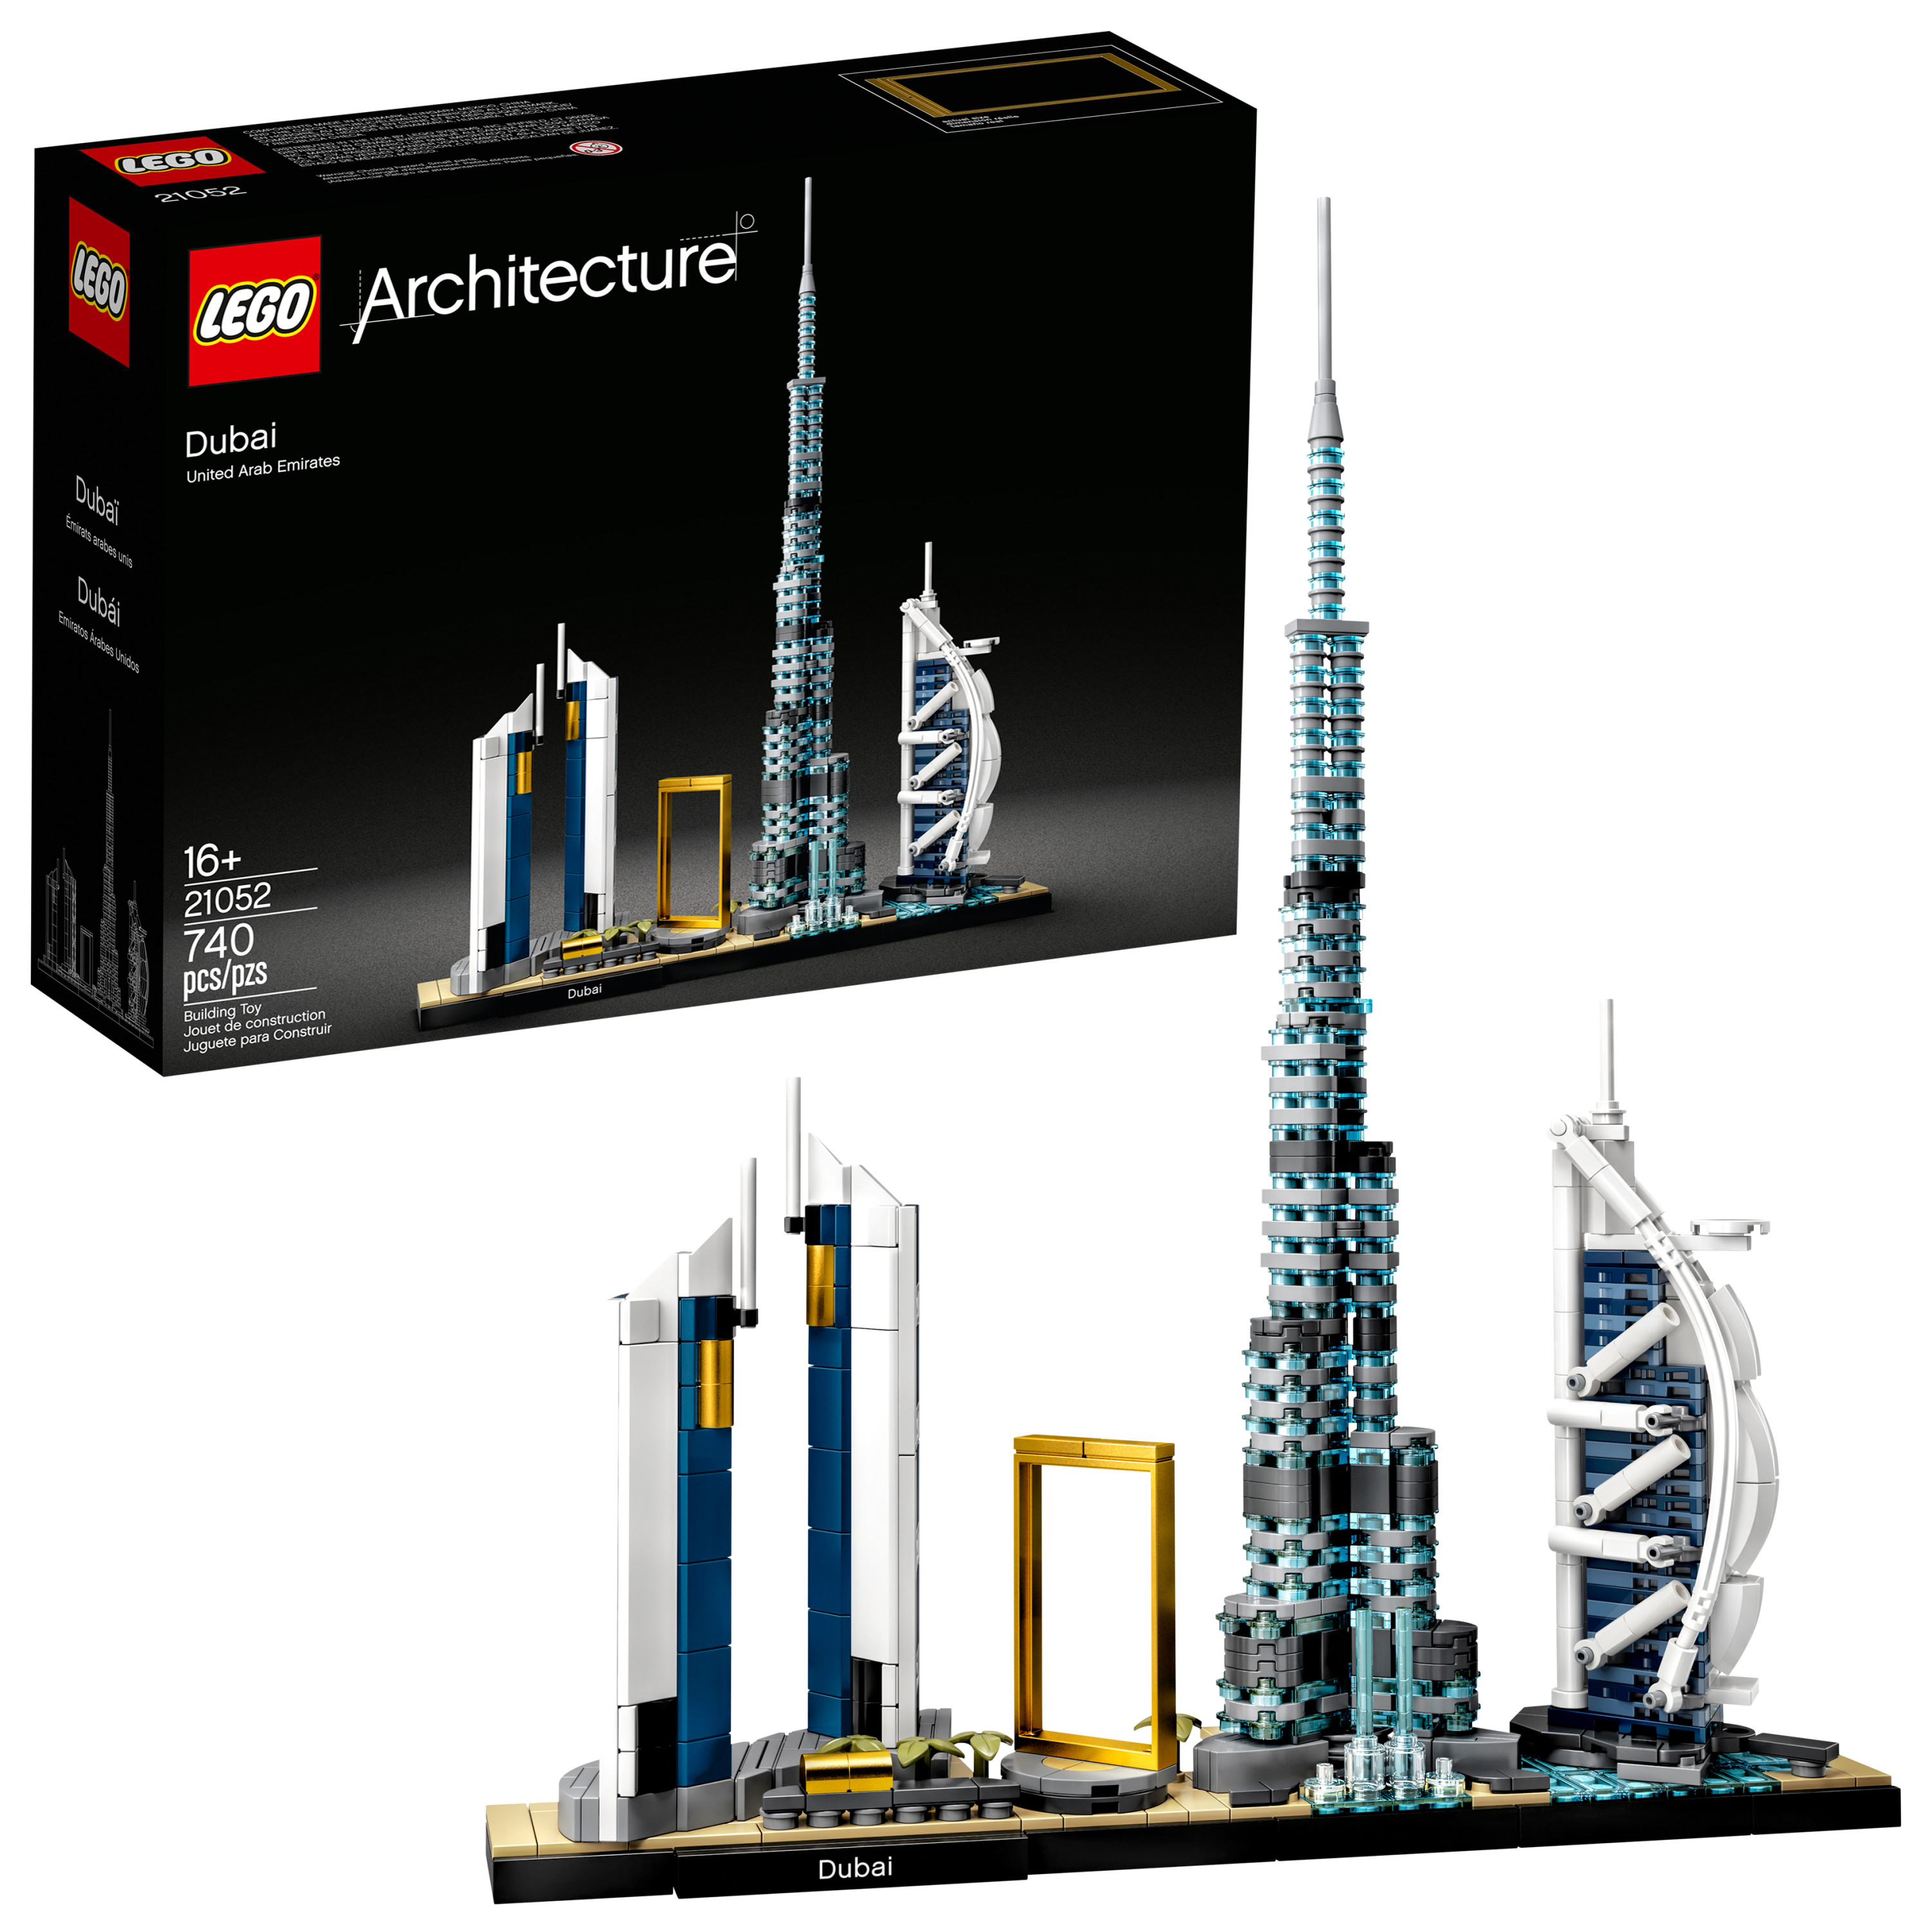 LEGO Dubai 21052 Building Set (740 Pieces) - image 1 of 5